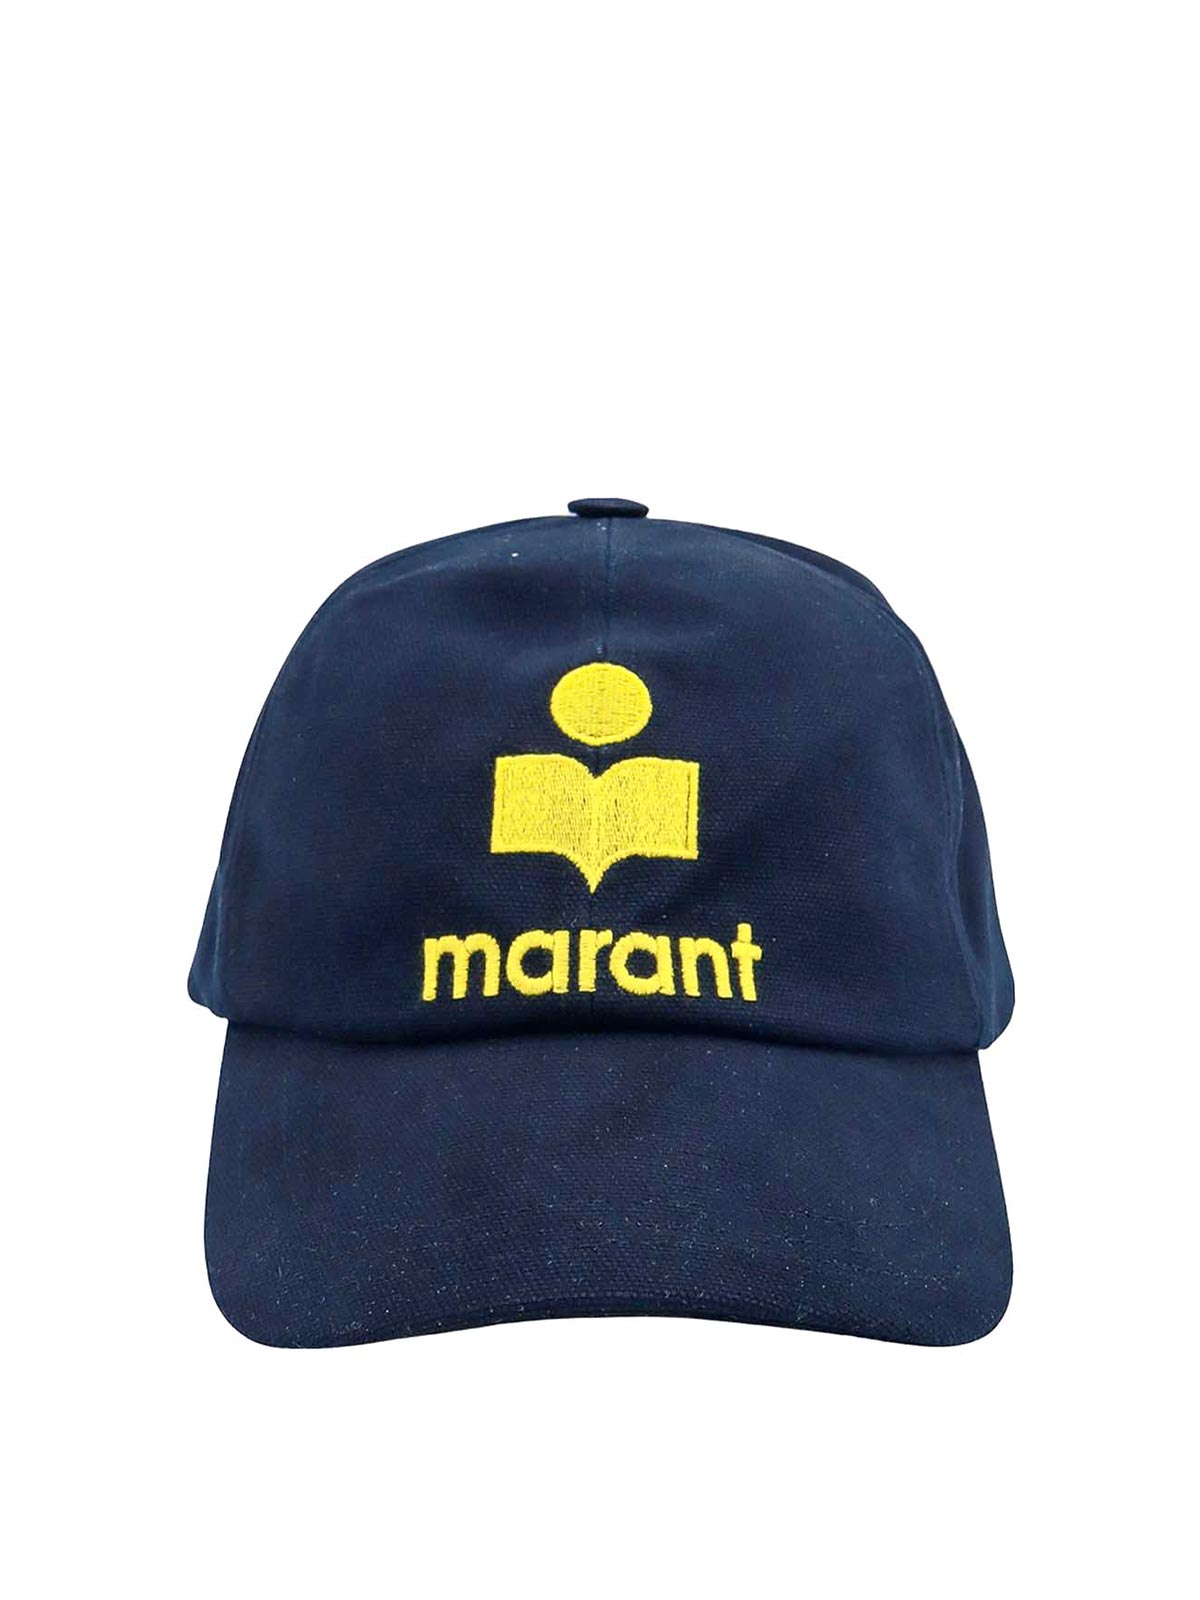 ISABEL MARANT COTTON HAT